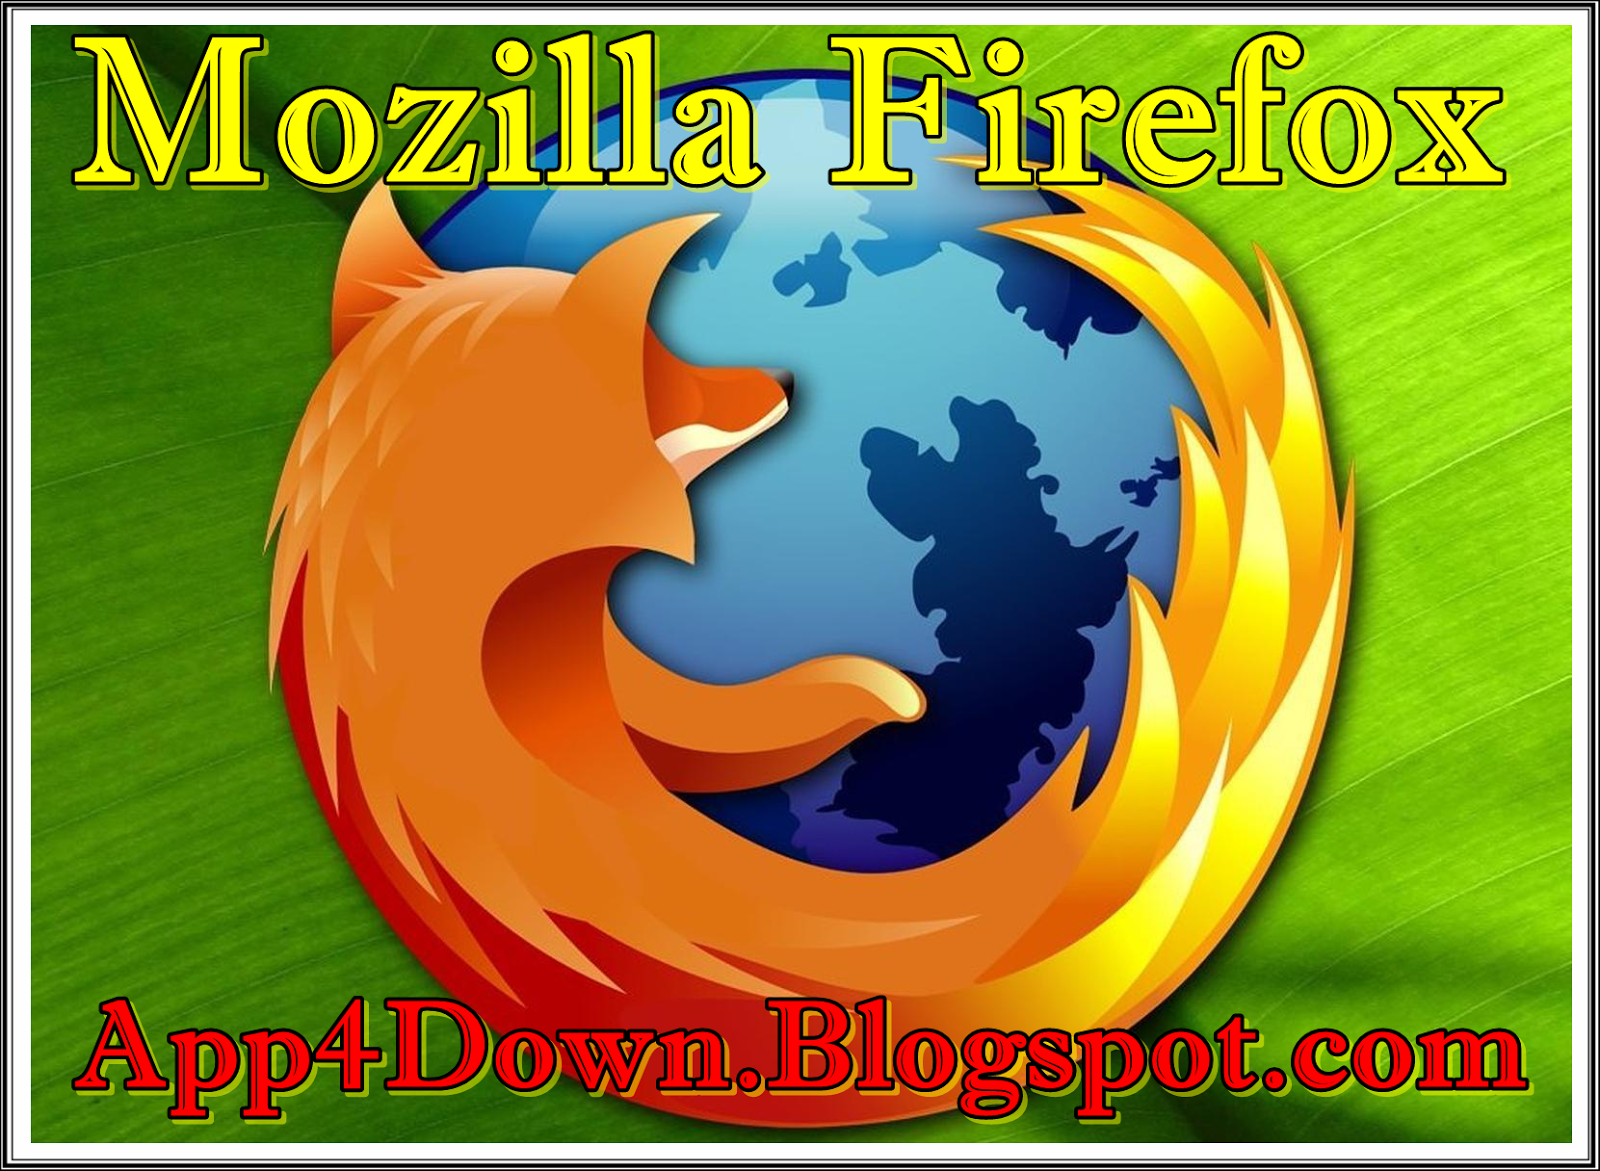 mozilla firefox download for windows 10 64 bit free